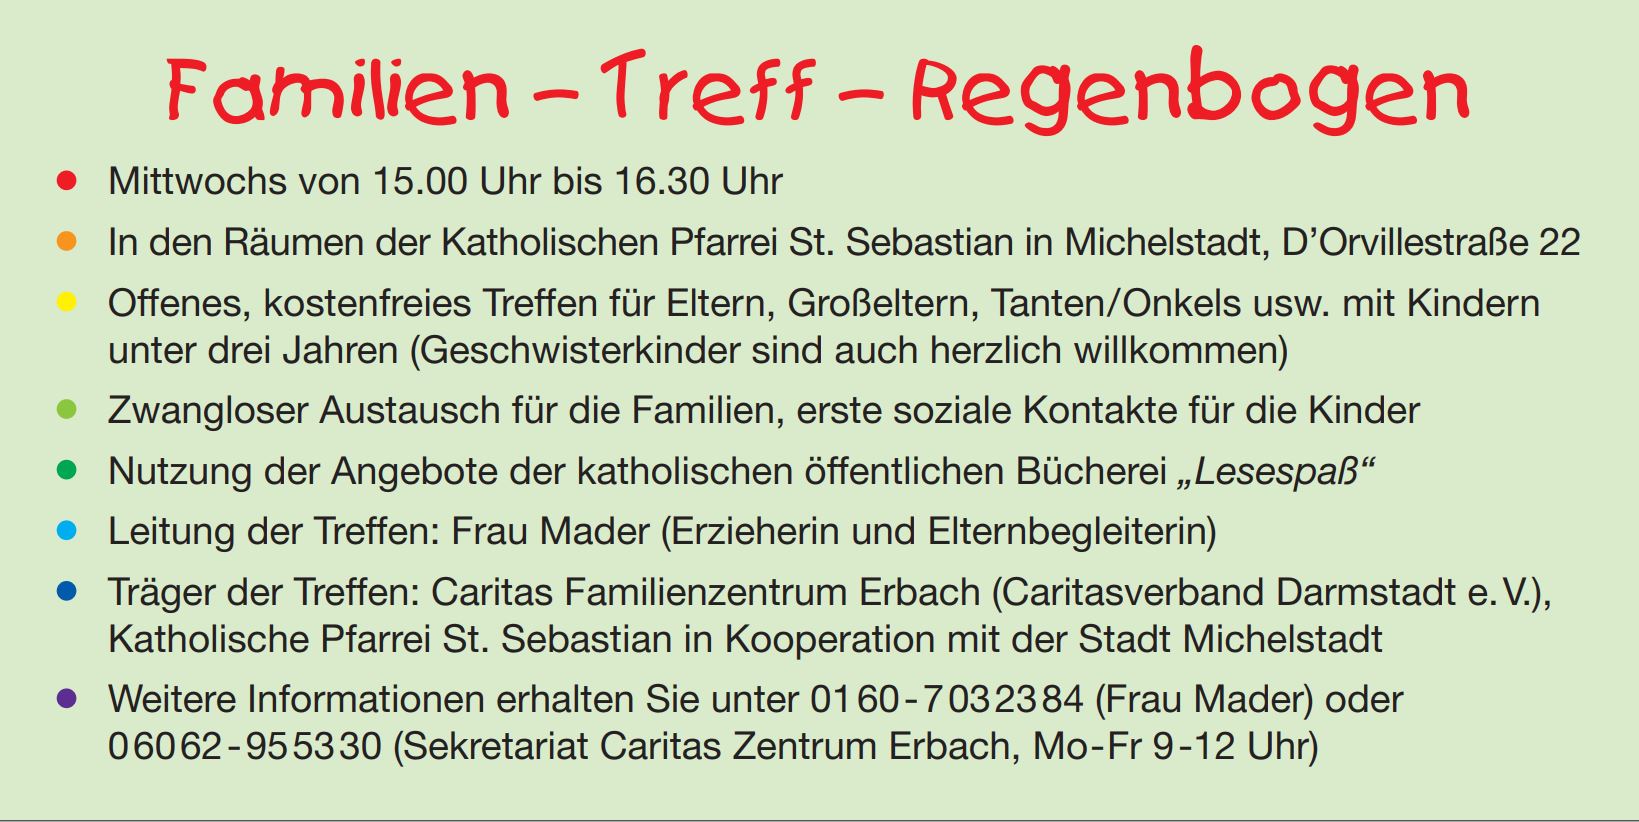 Familien-Treff-Regenbogen Hinweise (c) Caritas Familienzentrum Erbach